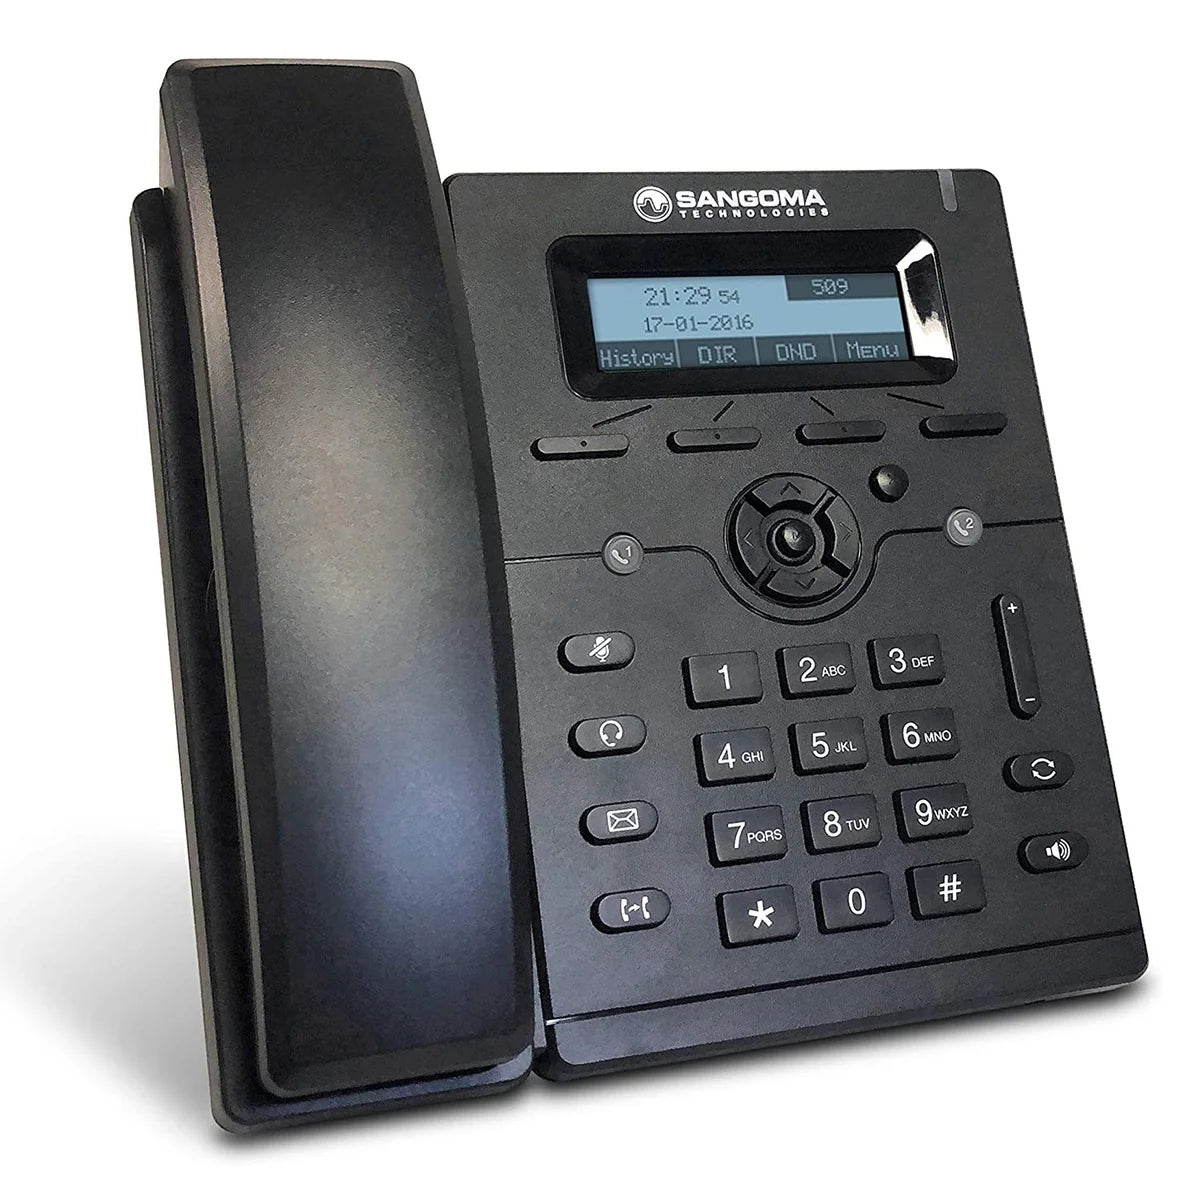 Sangoma S206 IP Phone (PHON-S206)